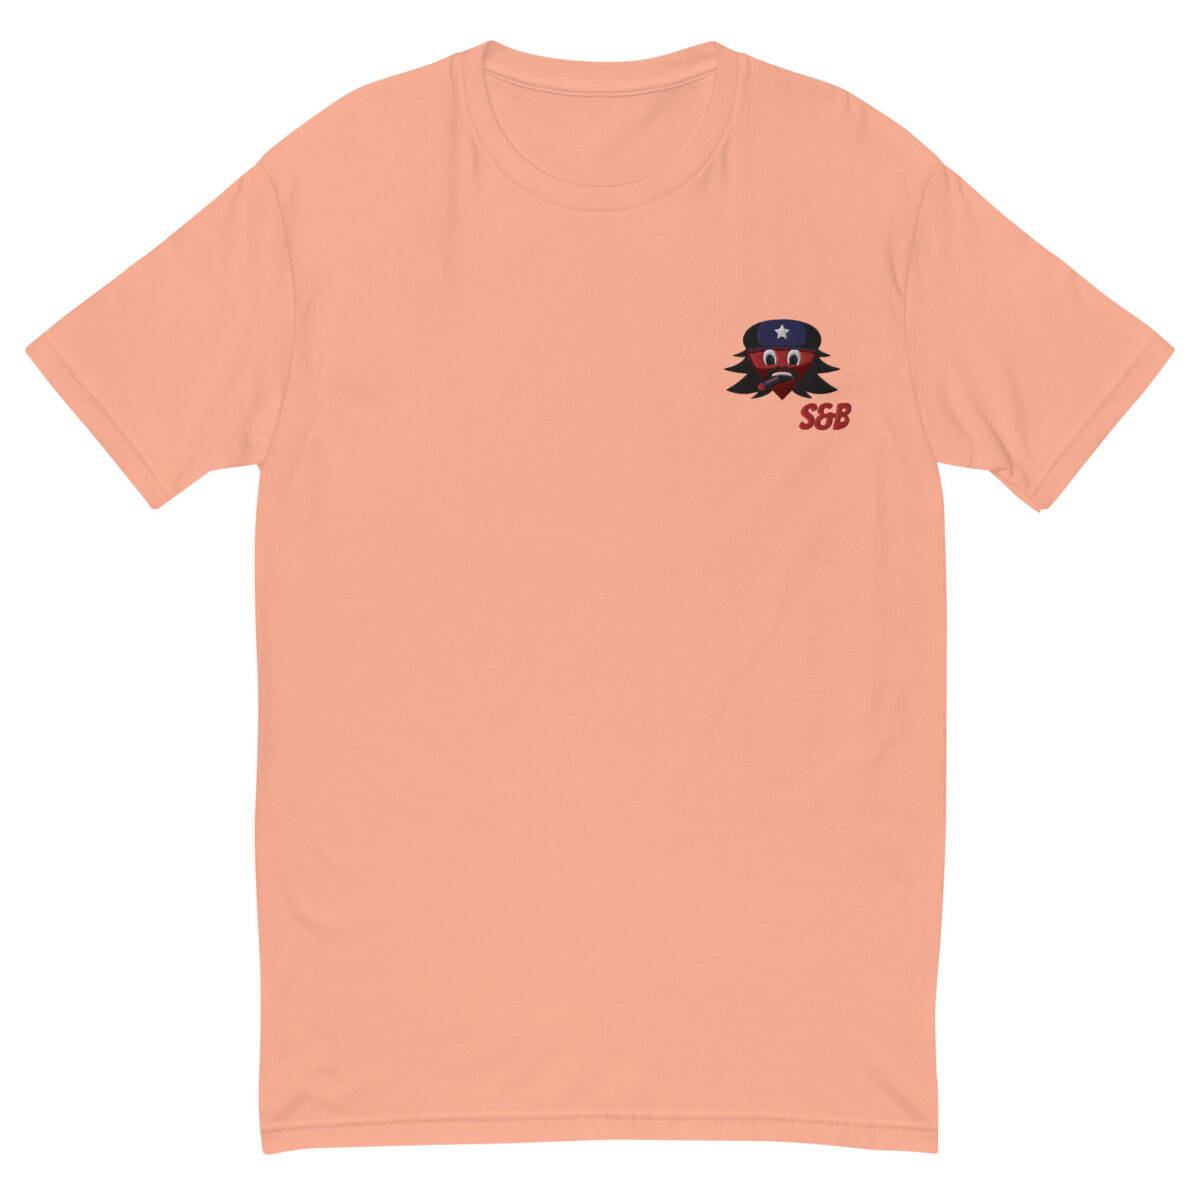 mens-fitted-t-shirt-desert-pink-front-653415fa1d084.jpg